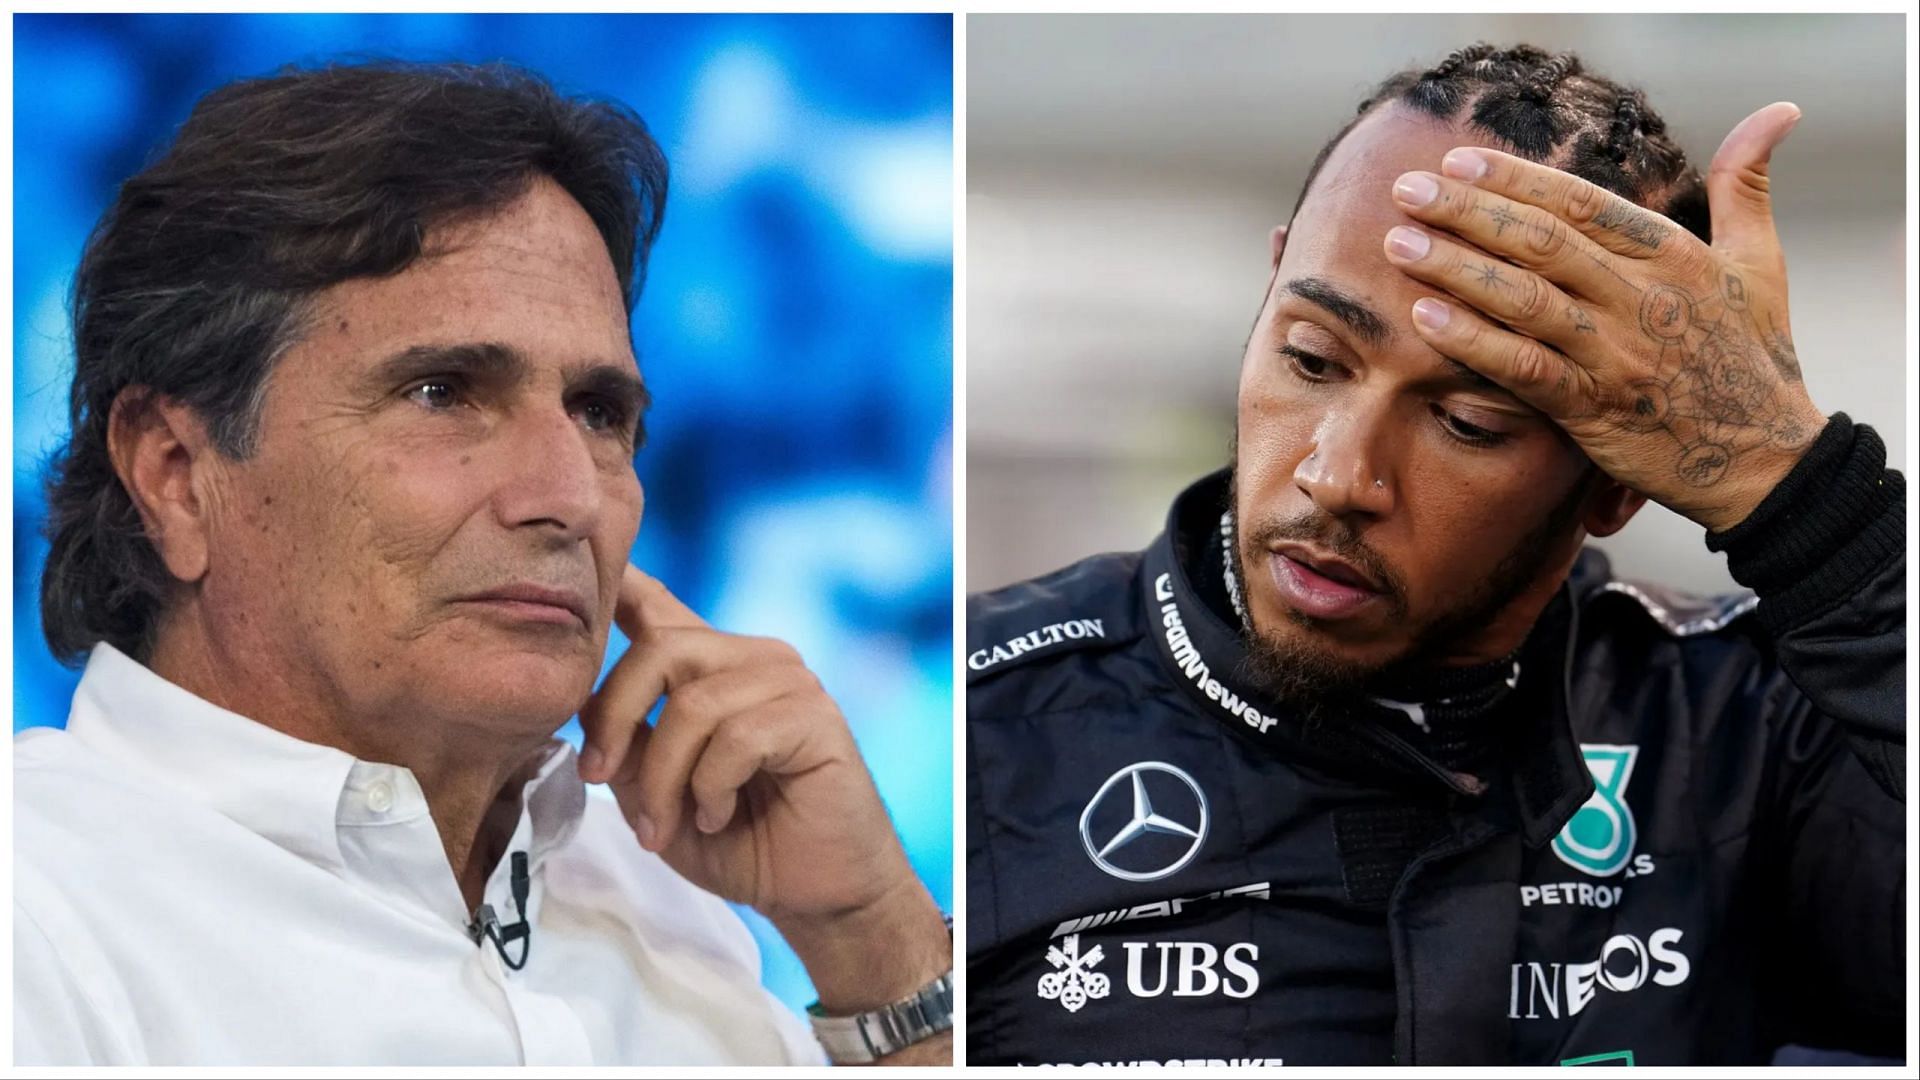 Nelson Piquet fined with 5 million Brazilian Reals for using racial slurs against Lewis Hamilton